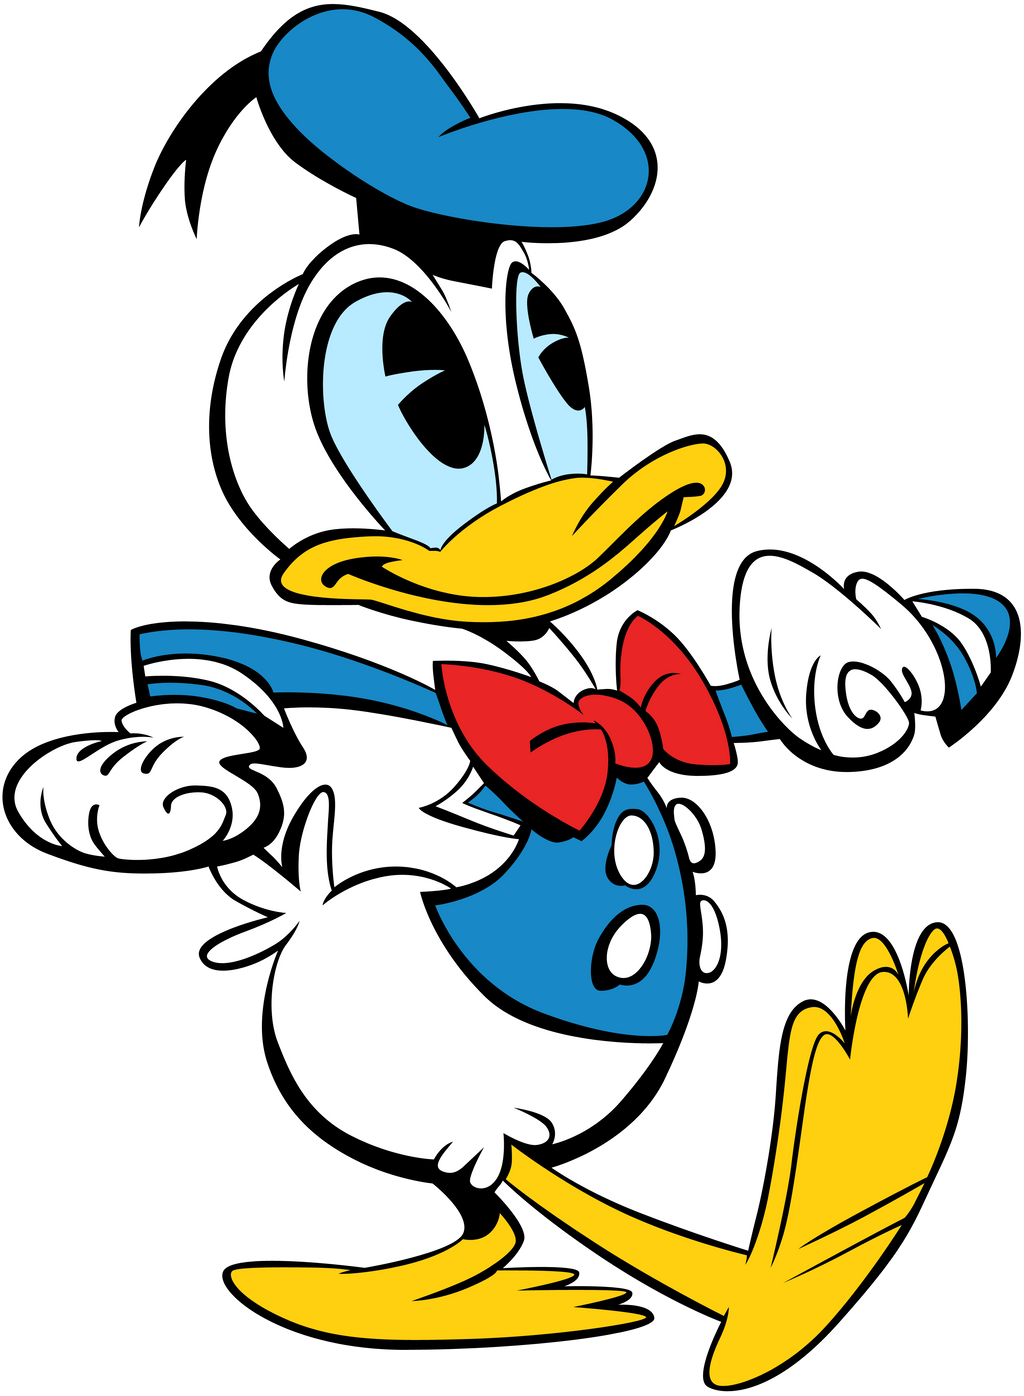 Donald Duck vector by JubaAj on DeviantArt